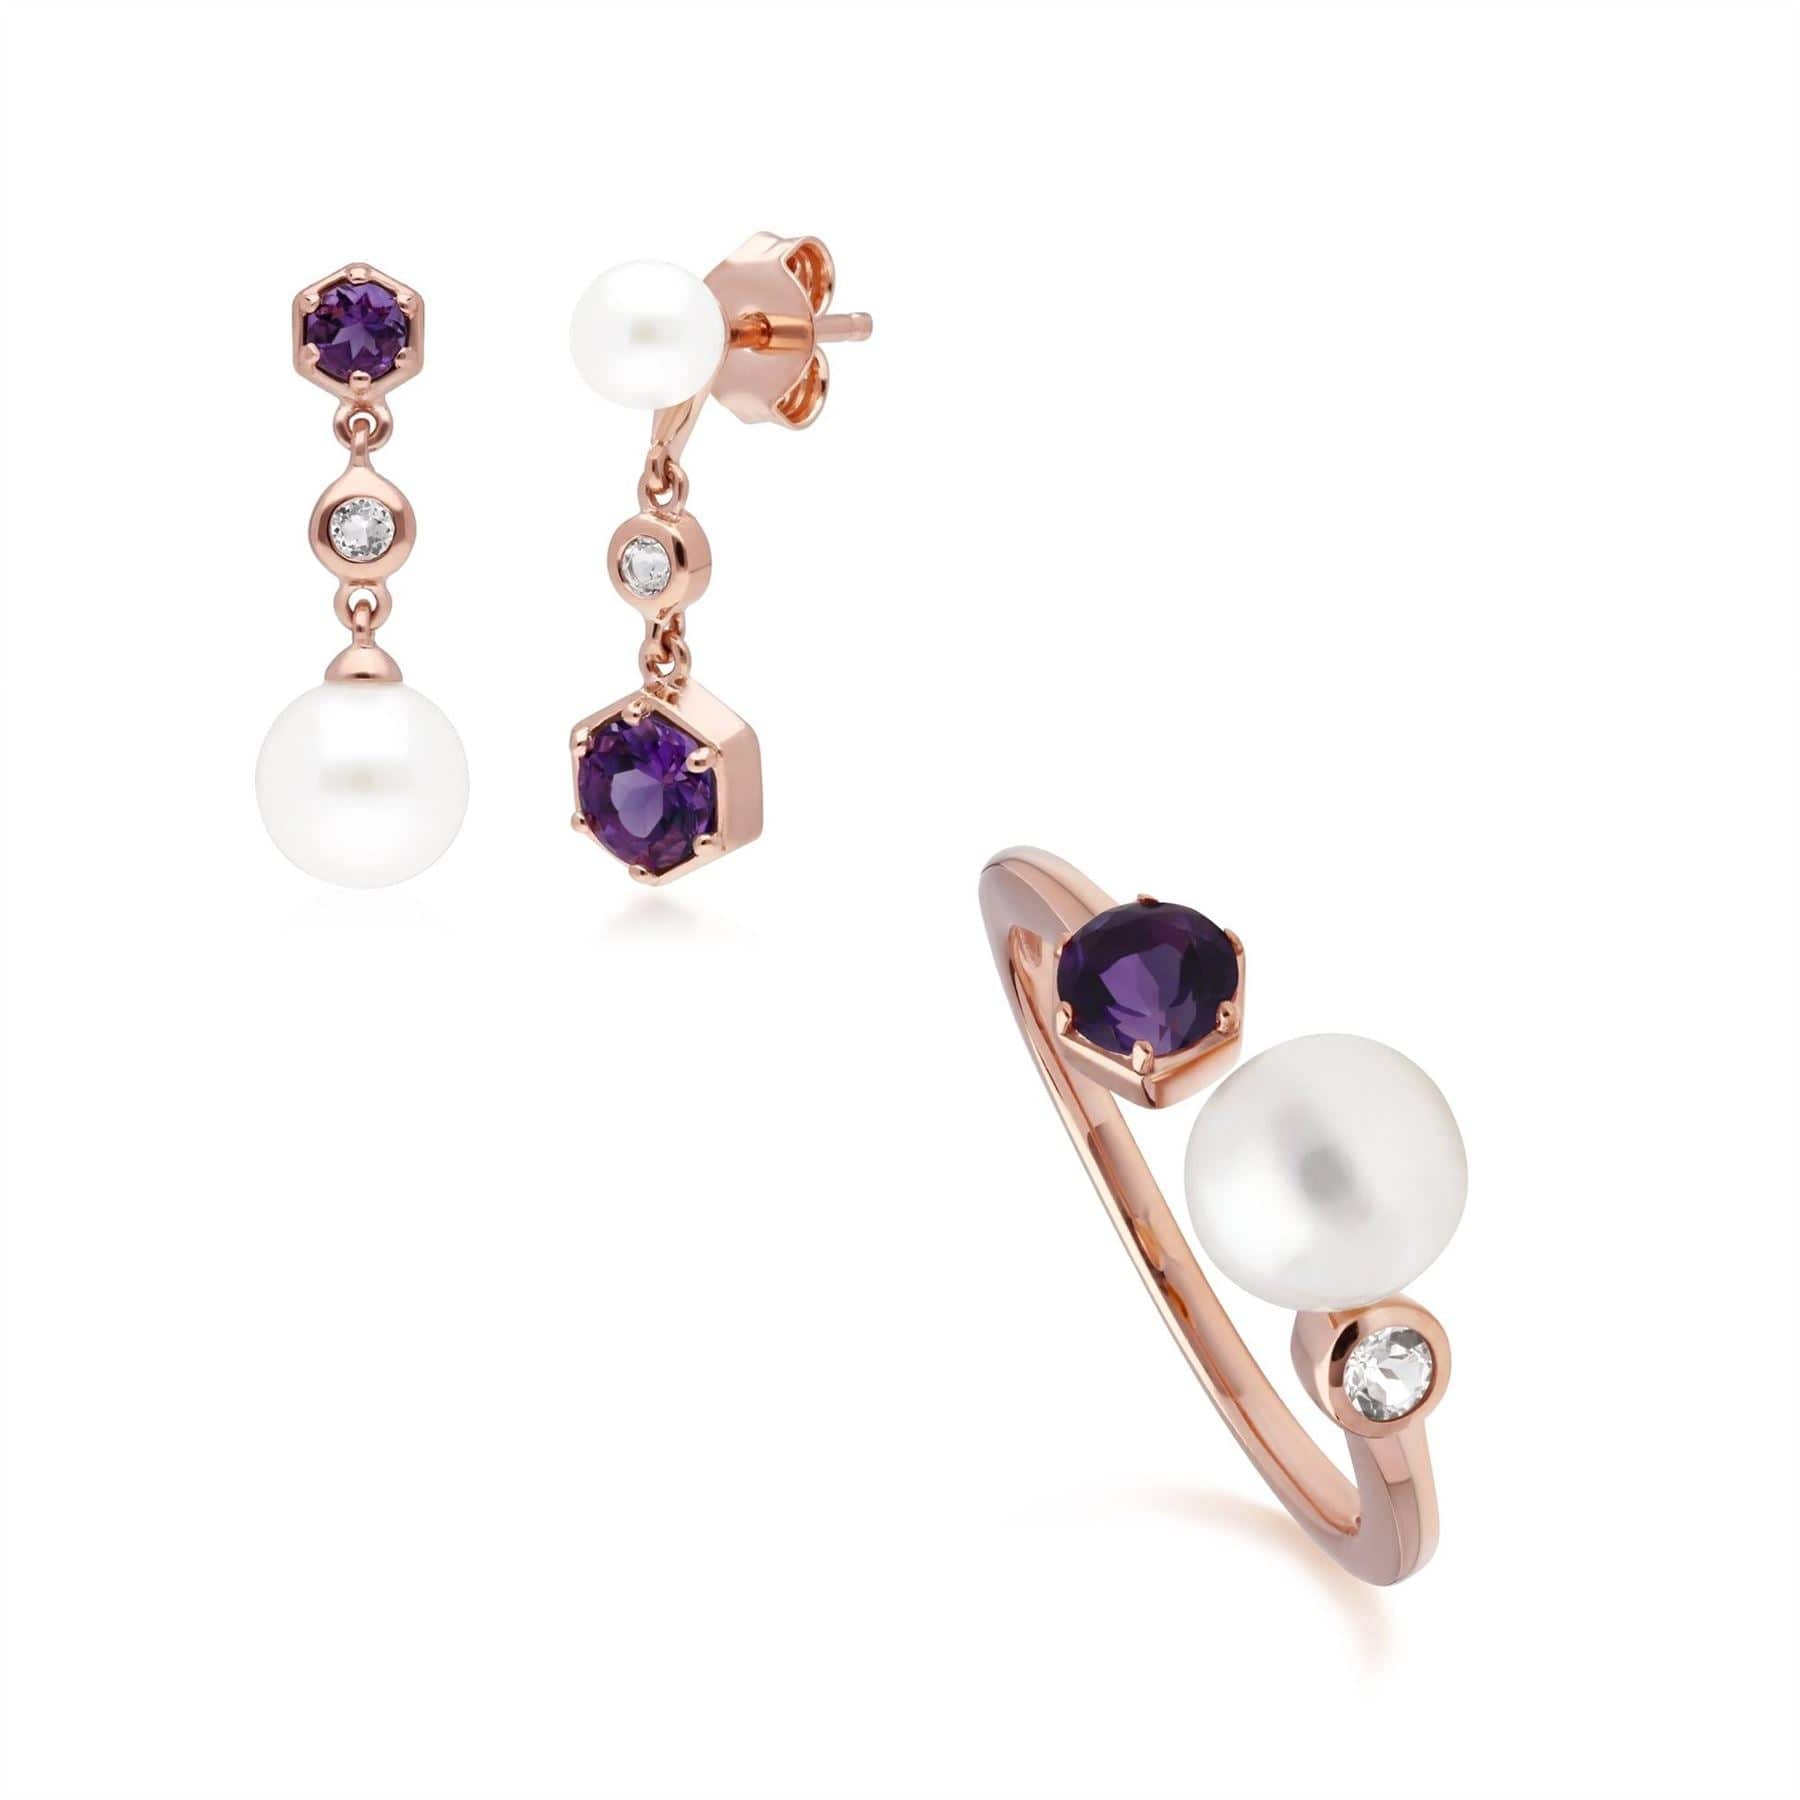 Modern Pearl, Amethyst & Topaz Earring & Ring Set in Rose Gold Plated Silver - Gemondo